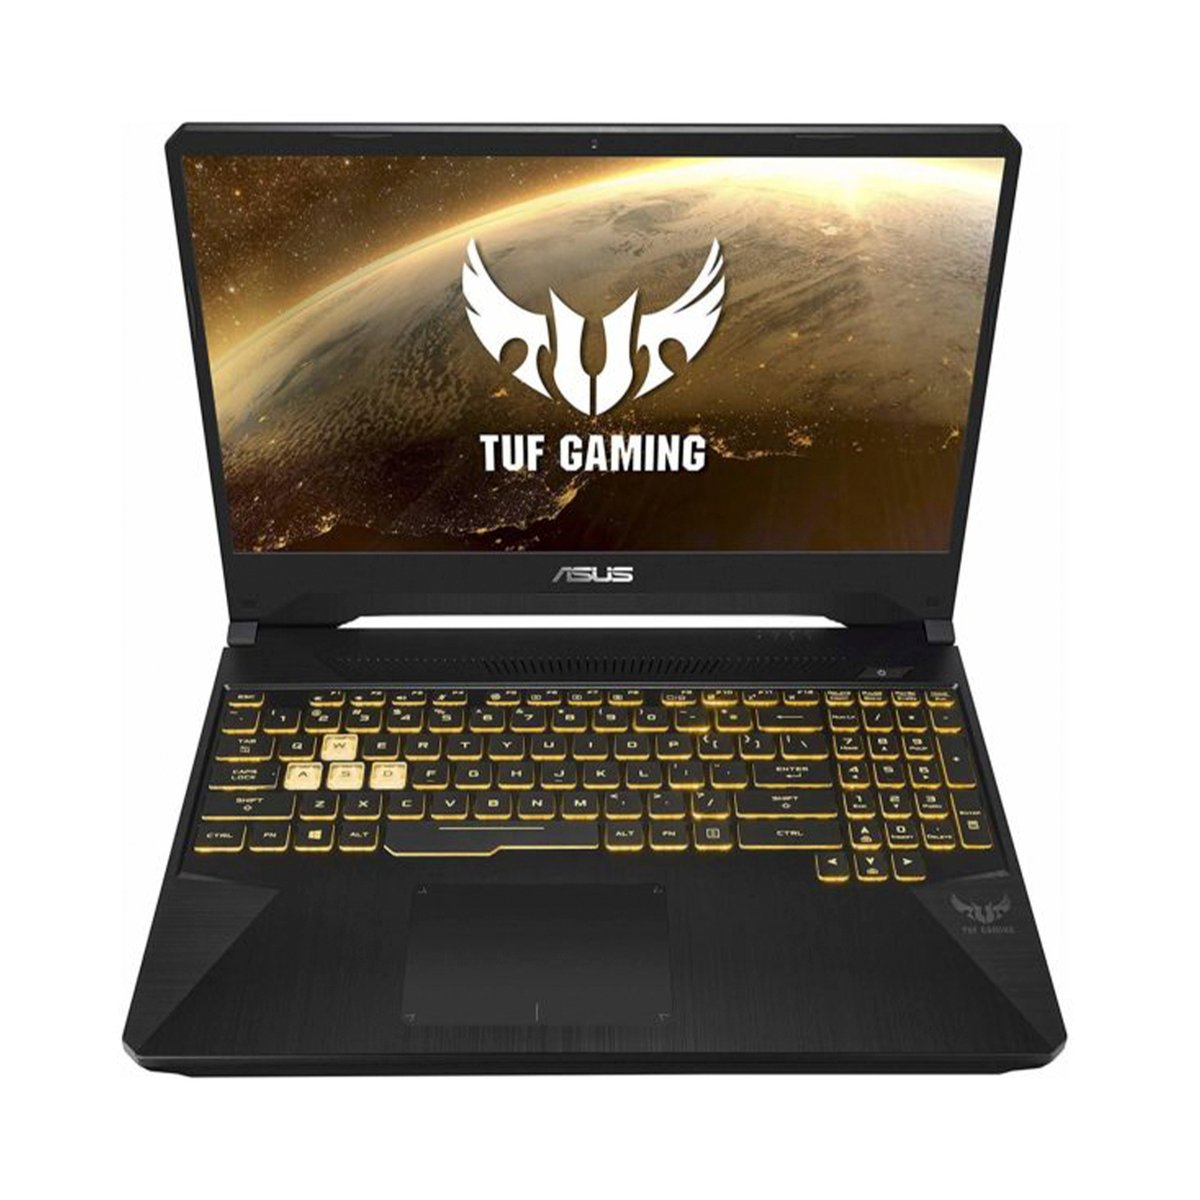 Asus TUF FX505DT-BQ051T Gaming Laptop AMD R5-3550H,8GB RAM,512GB SSD,4GB VRAM,15.6" FHD,Windows 10,Black